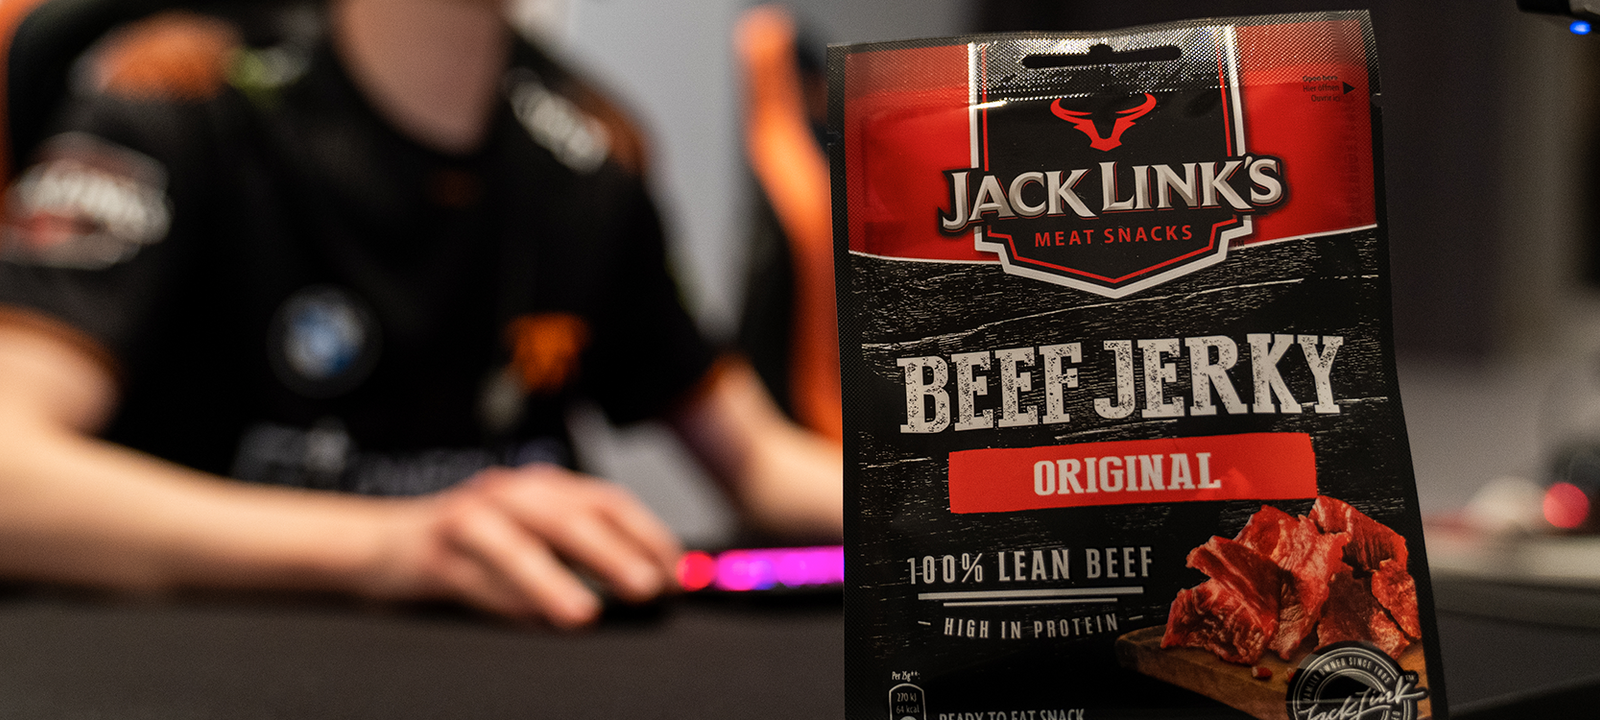 A packet of Jack Links beef jerkey